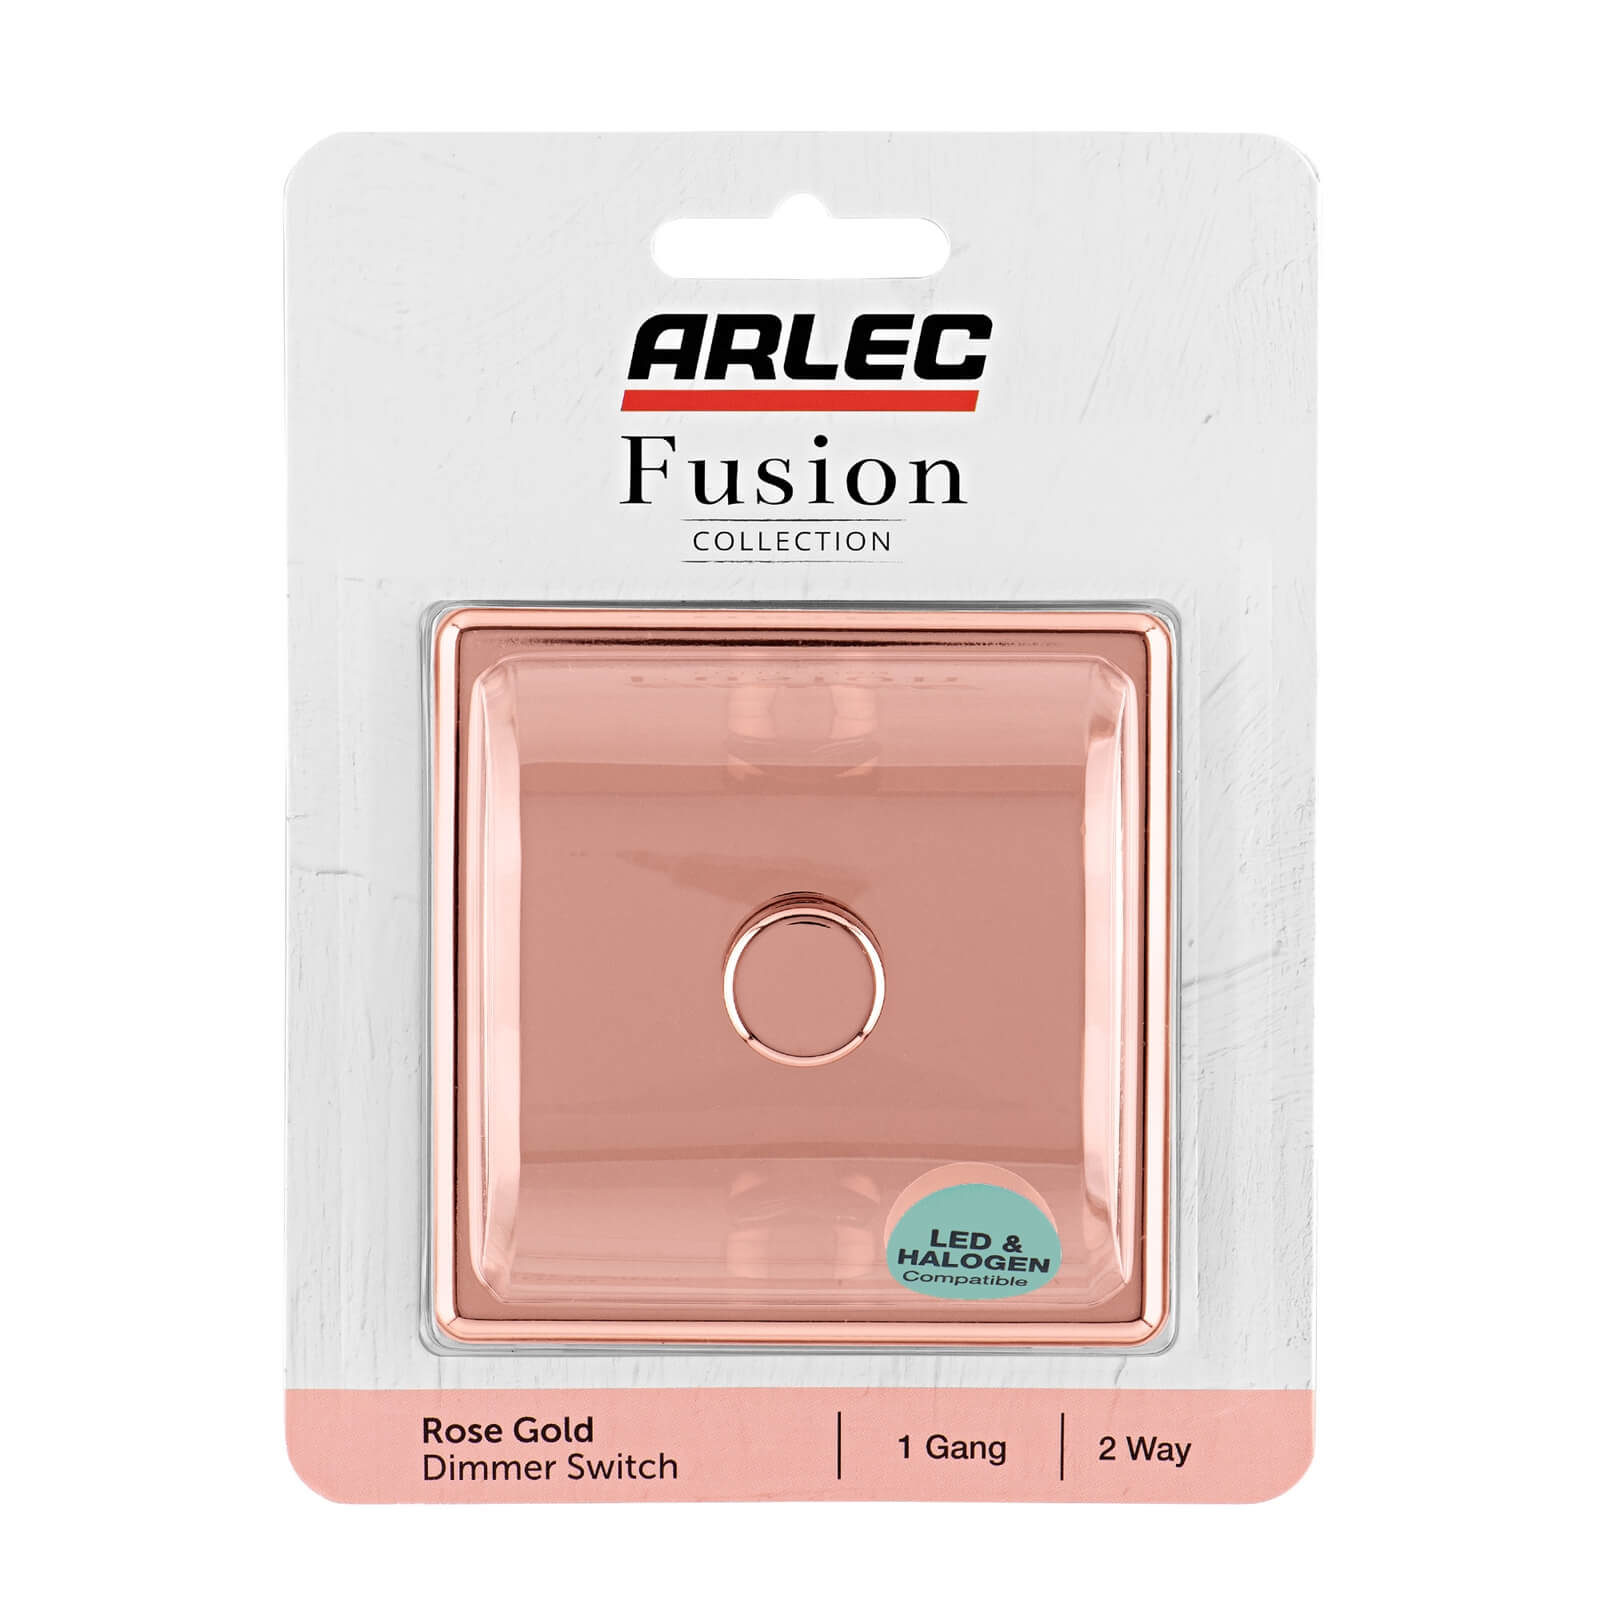 Arlec Fusion 1 Gang 2 Way Rose Gold Dimmer switch